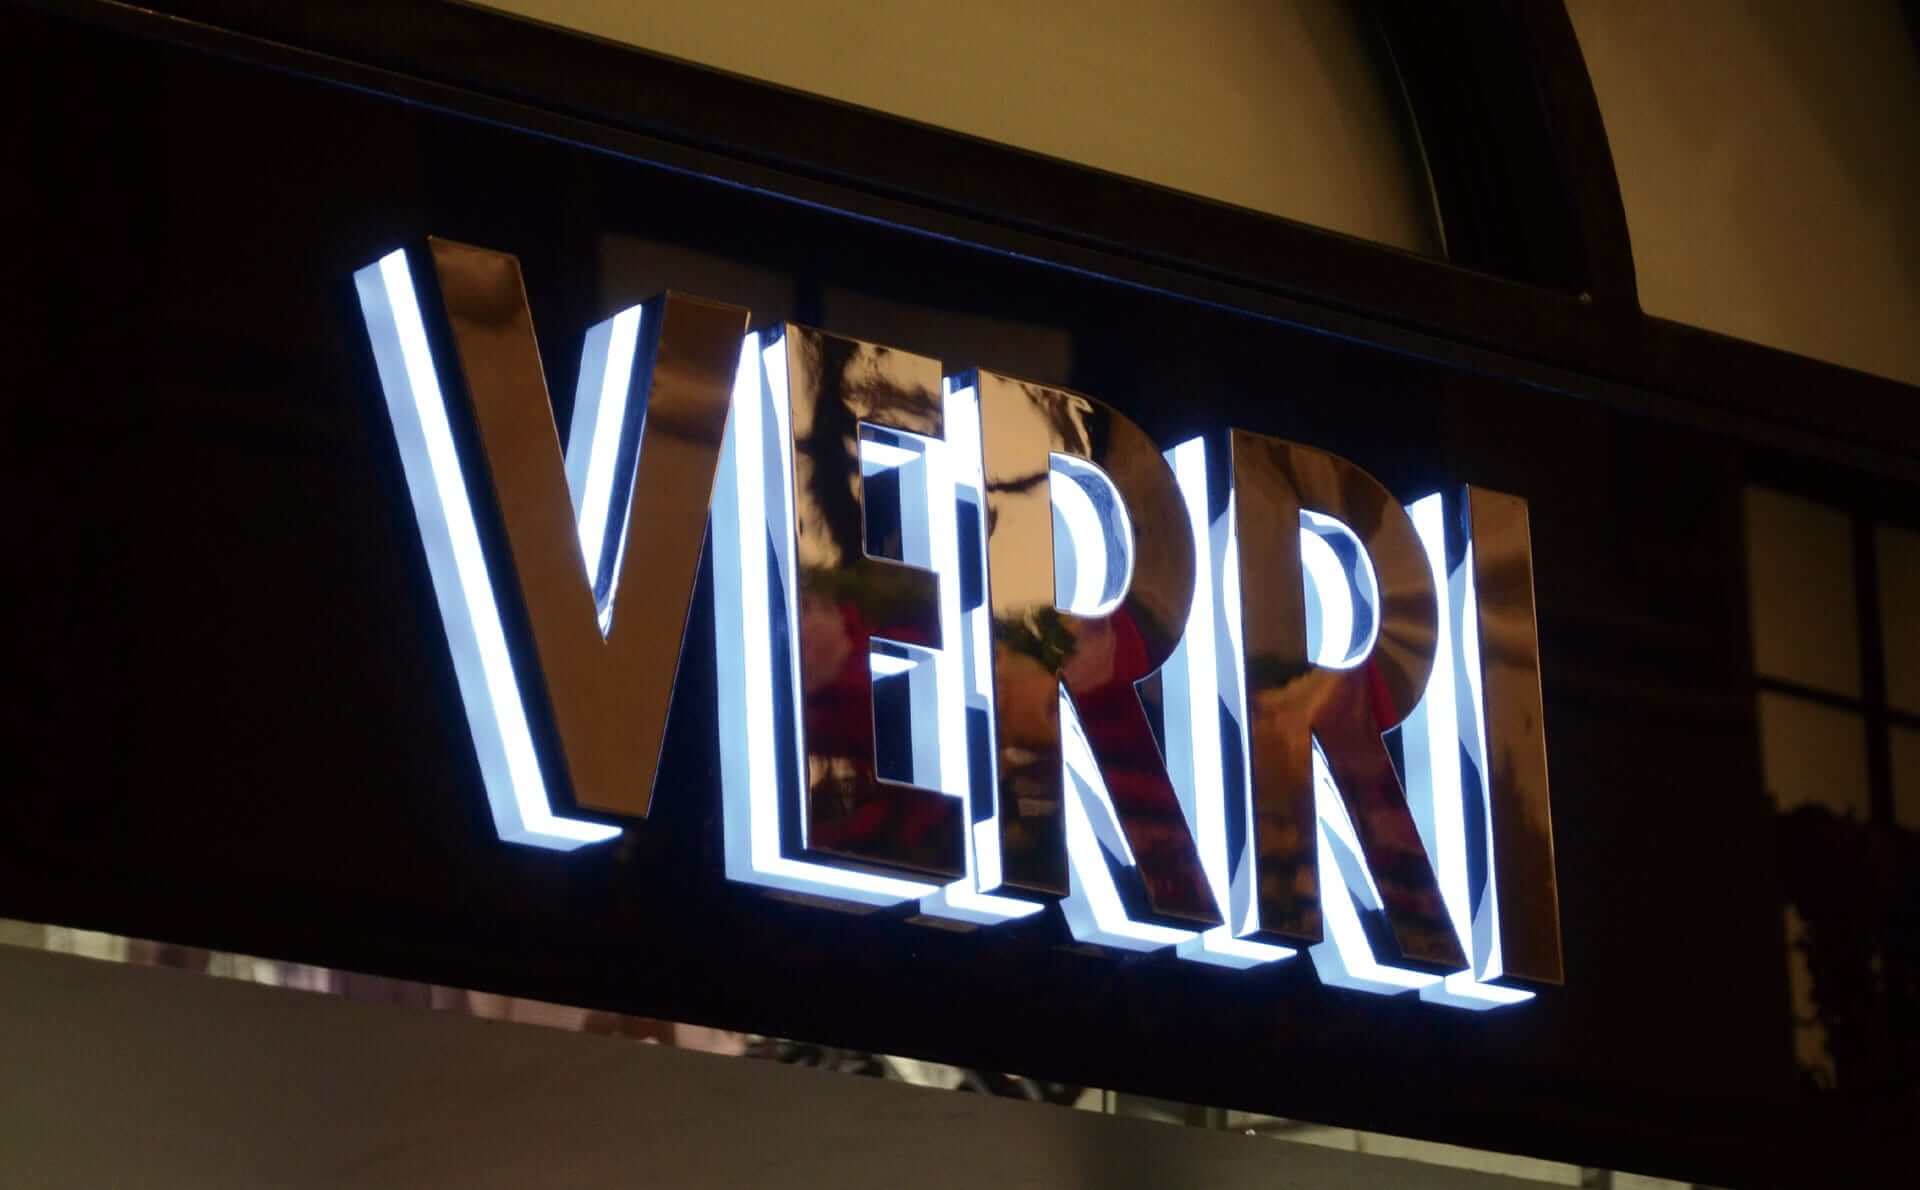 Pro Metal Reverse Channel Letters For Verri